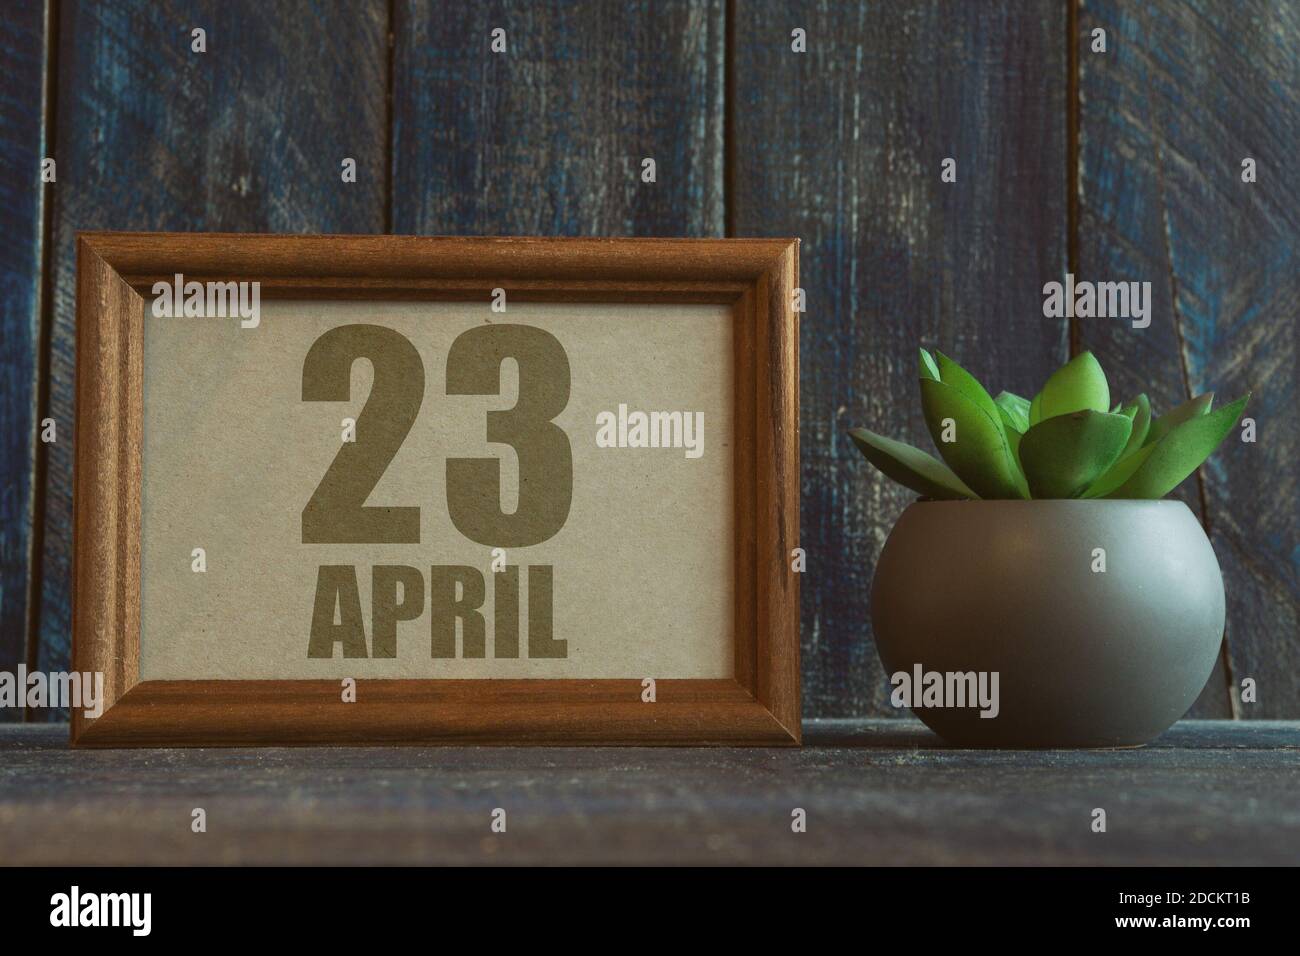 april. Tag 23 des Monats, Datum im Rahmen neben Sukkulente auf hölzernen Hintergrund Frühlingsmonat, Tag des Jahres Konzept. Stockfoto